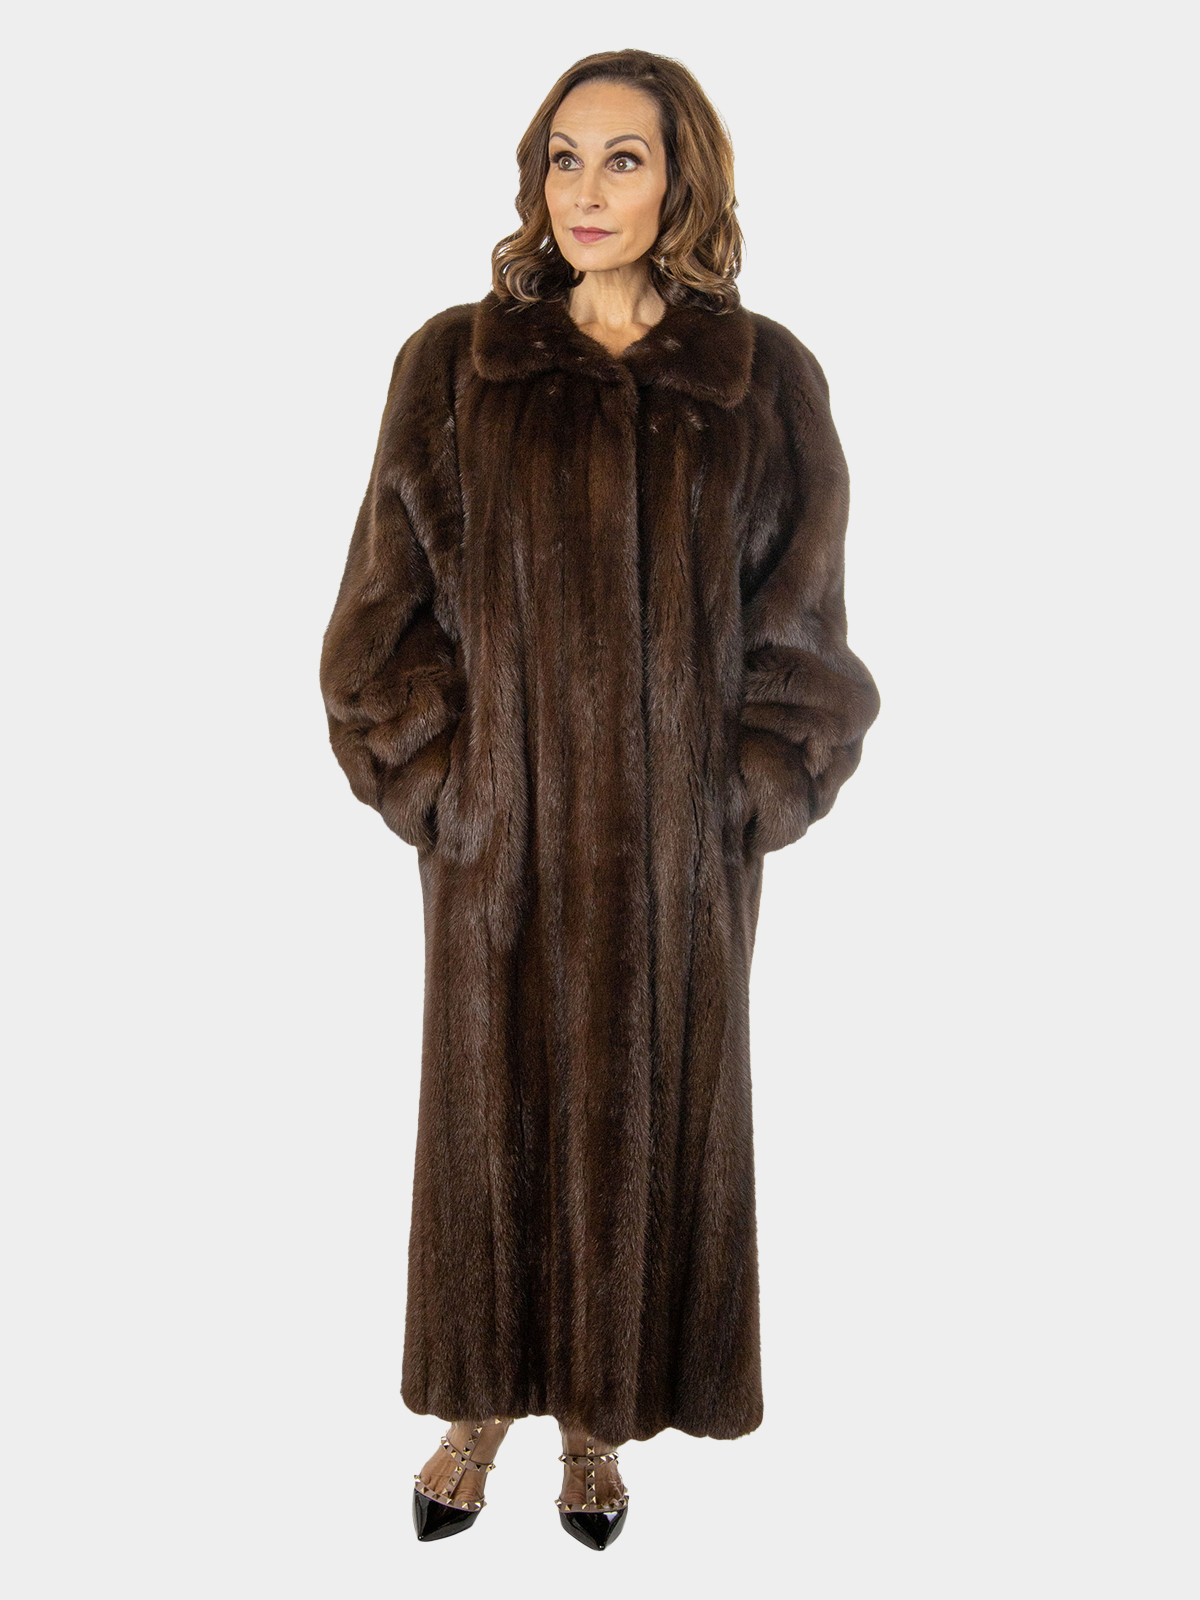 Mahogany Mink Fur Coat Reversible to Rain Taffeta - Large | Estate Furs